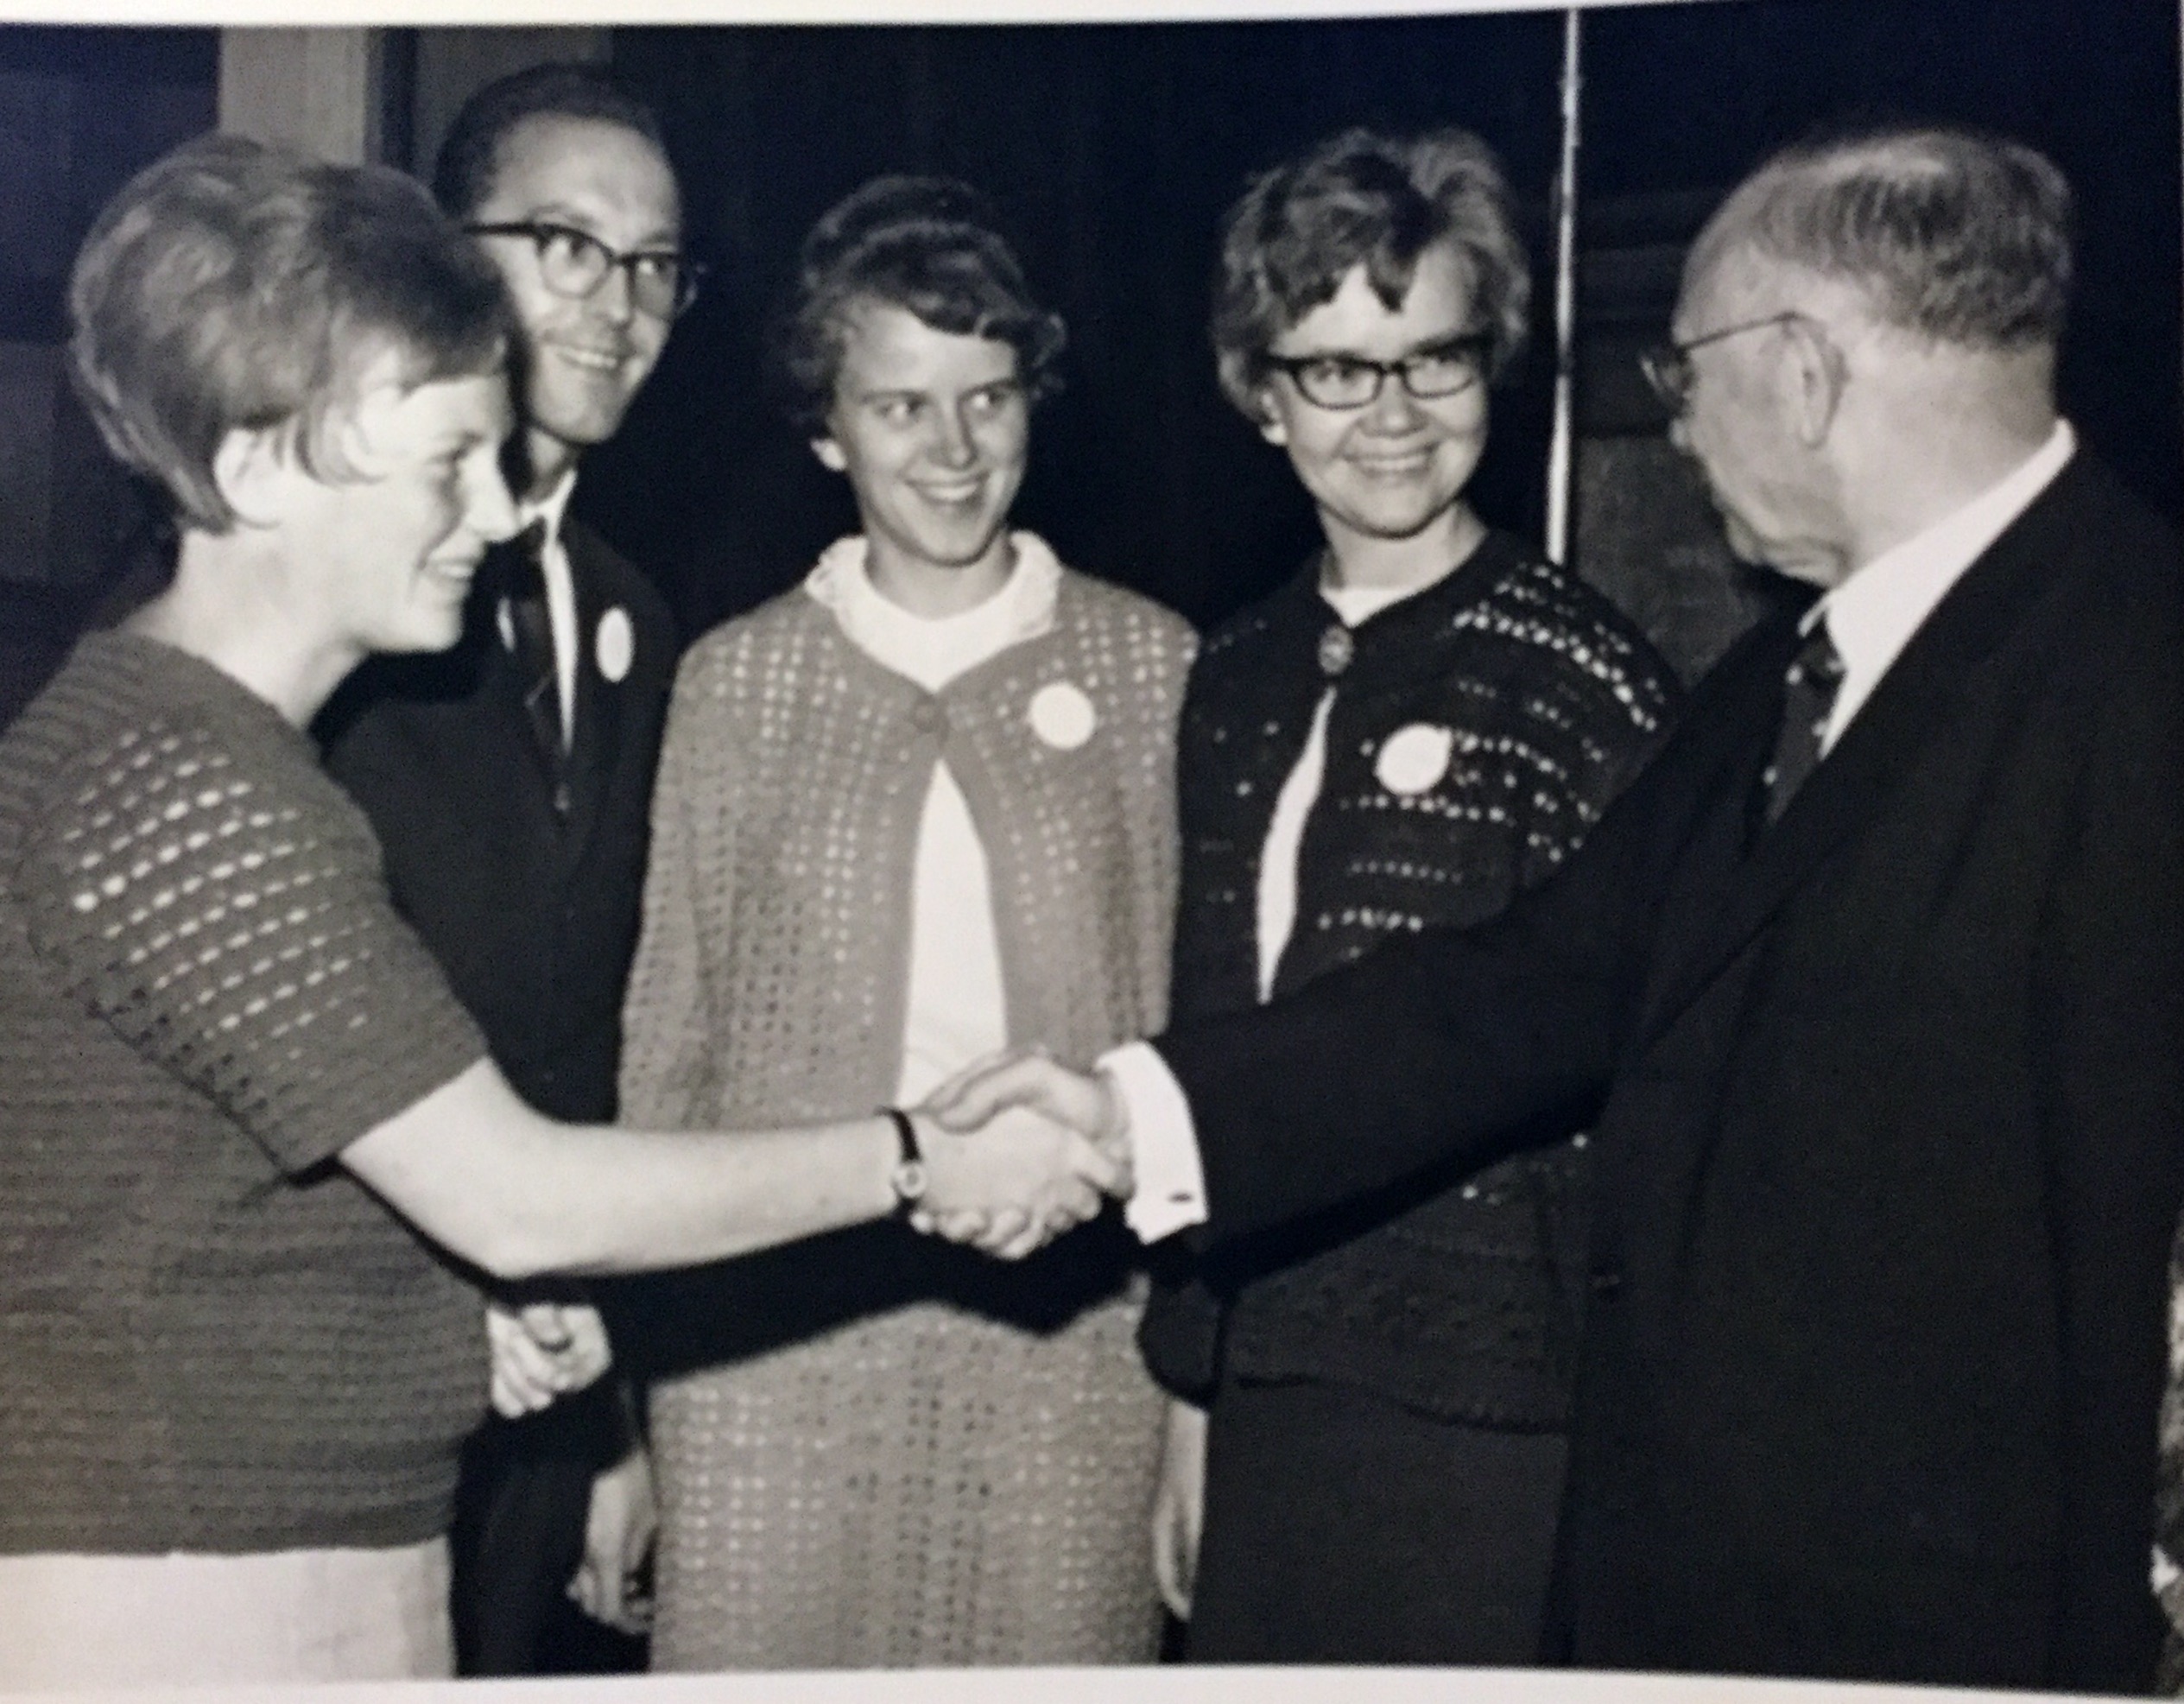 World Methodist Youth Conference 1966, Norwegian participants:
Lillian Iversen (Jøranson), Harald Larsen, Toril Olsen (Kristiansen), Jorunn Wendel, NN